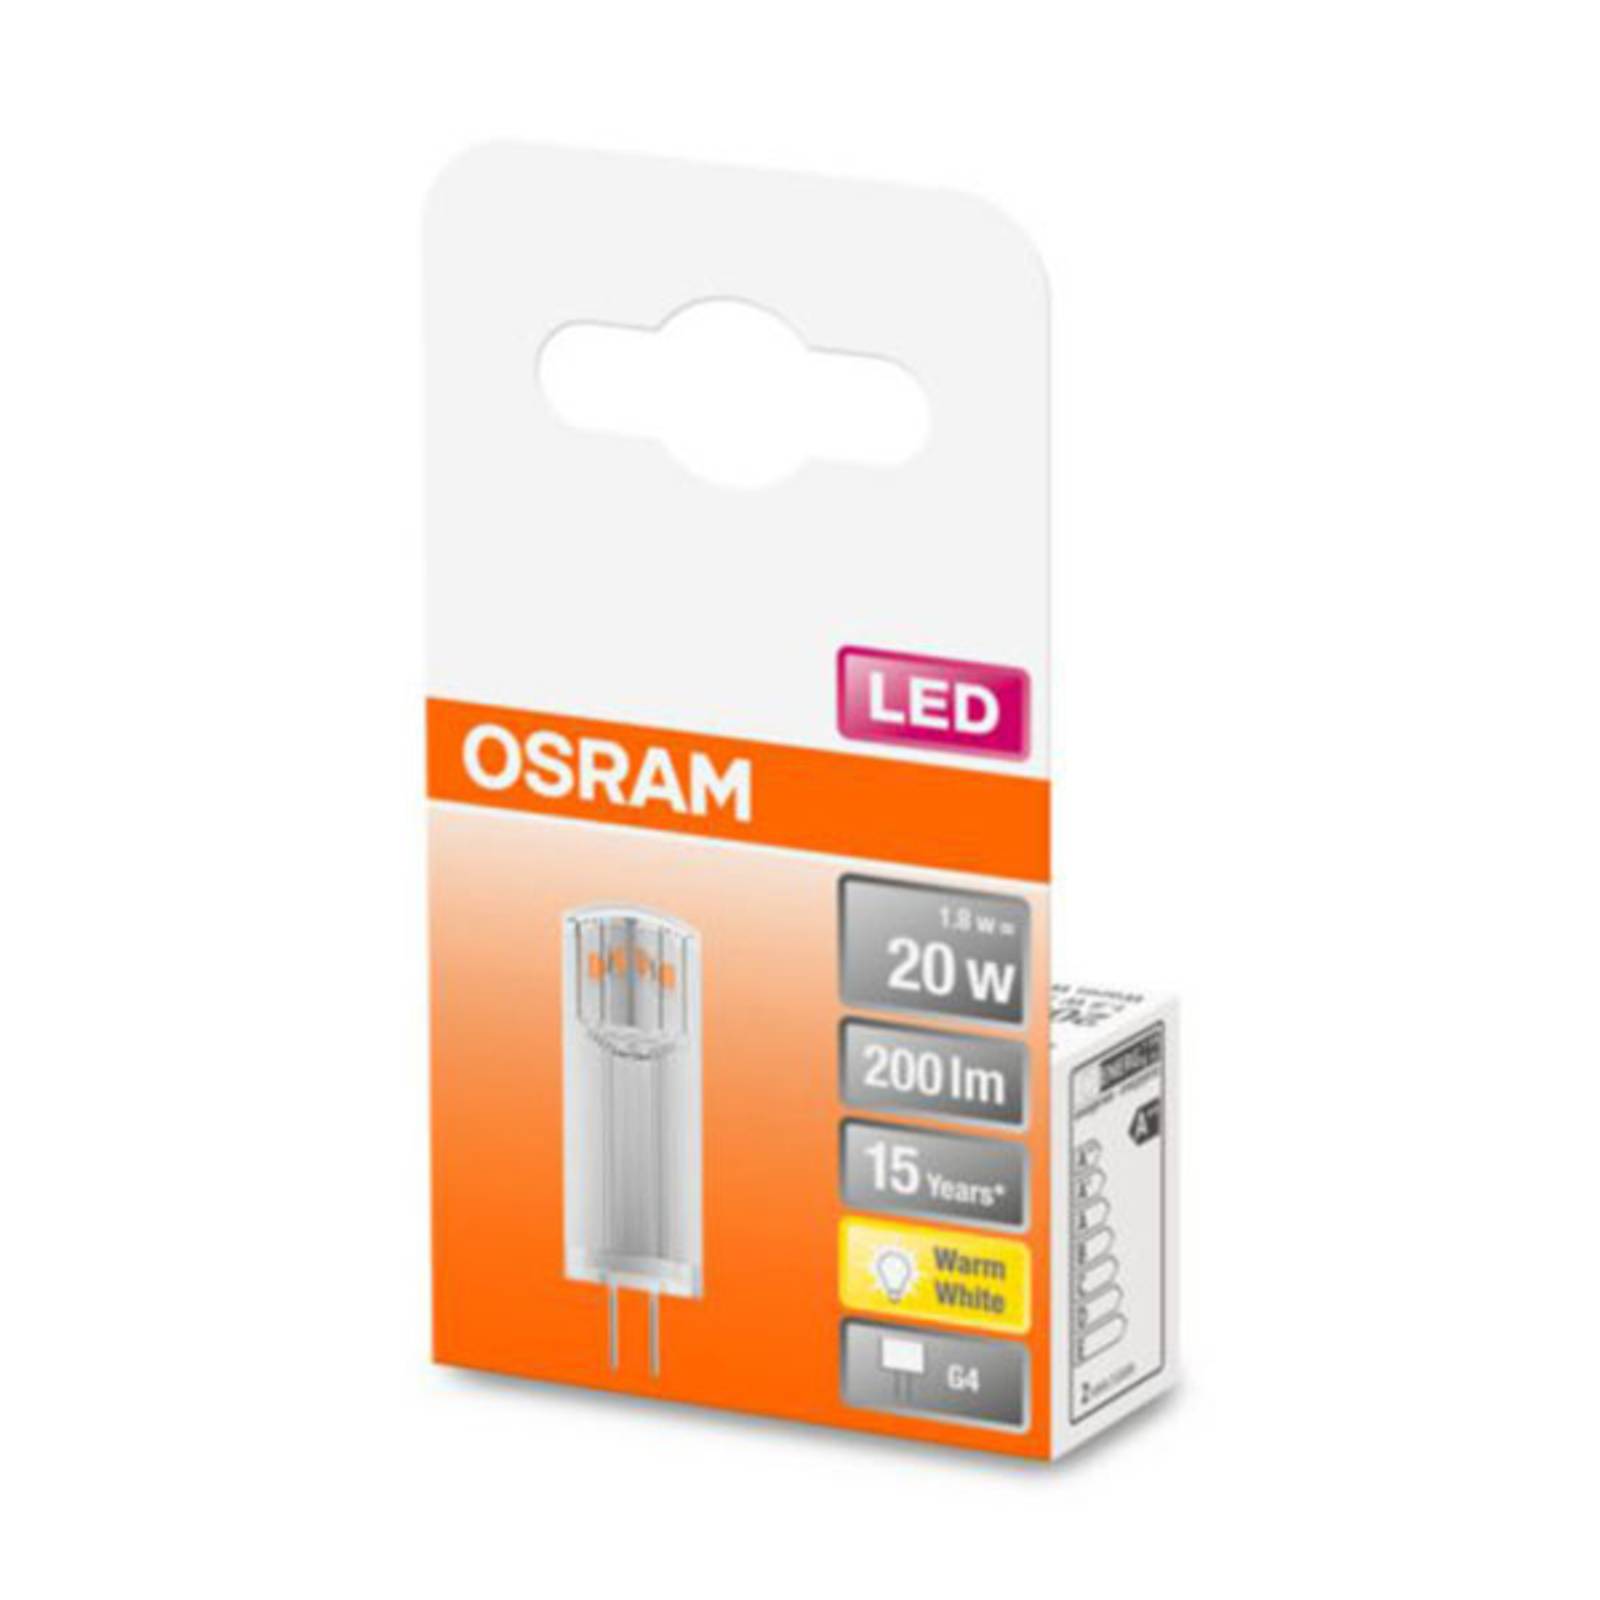 Osram Led Capsule lamp Helder 1.8w Equivalent 20w G4 Warm Wit online kopen